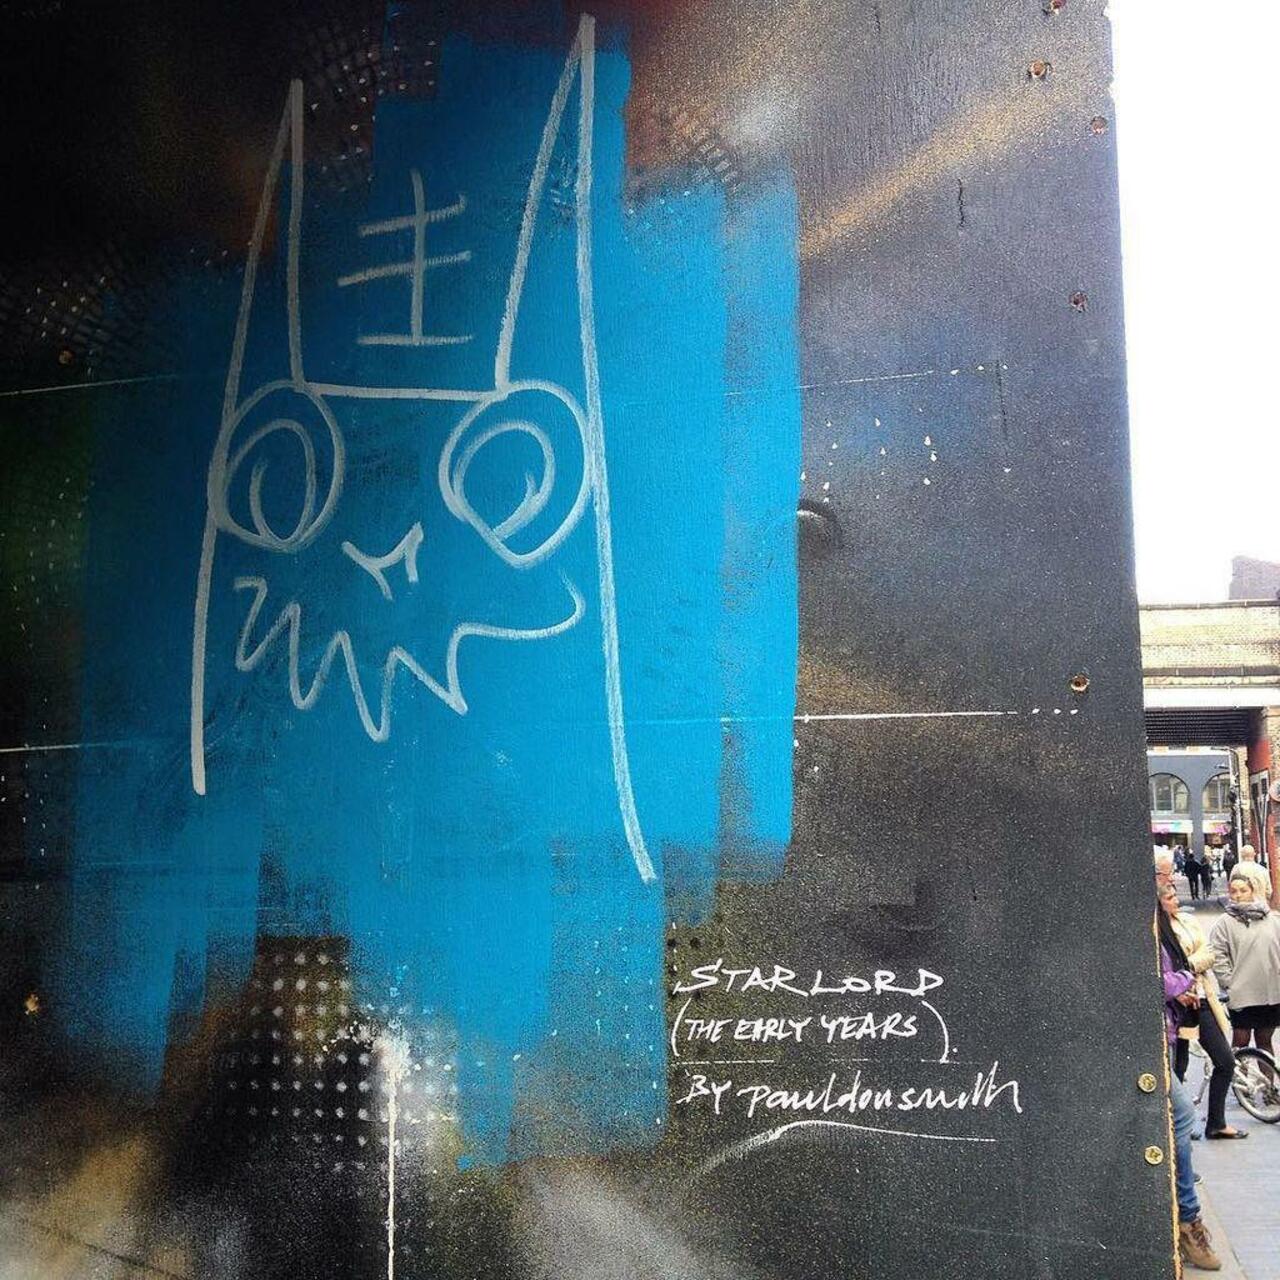 StArtEverywhere: #streetart #streetartlondon #graffiti #london #thisislondon by isadarko http://t.co/FZdLk7h2r9